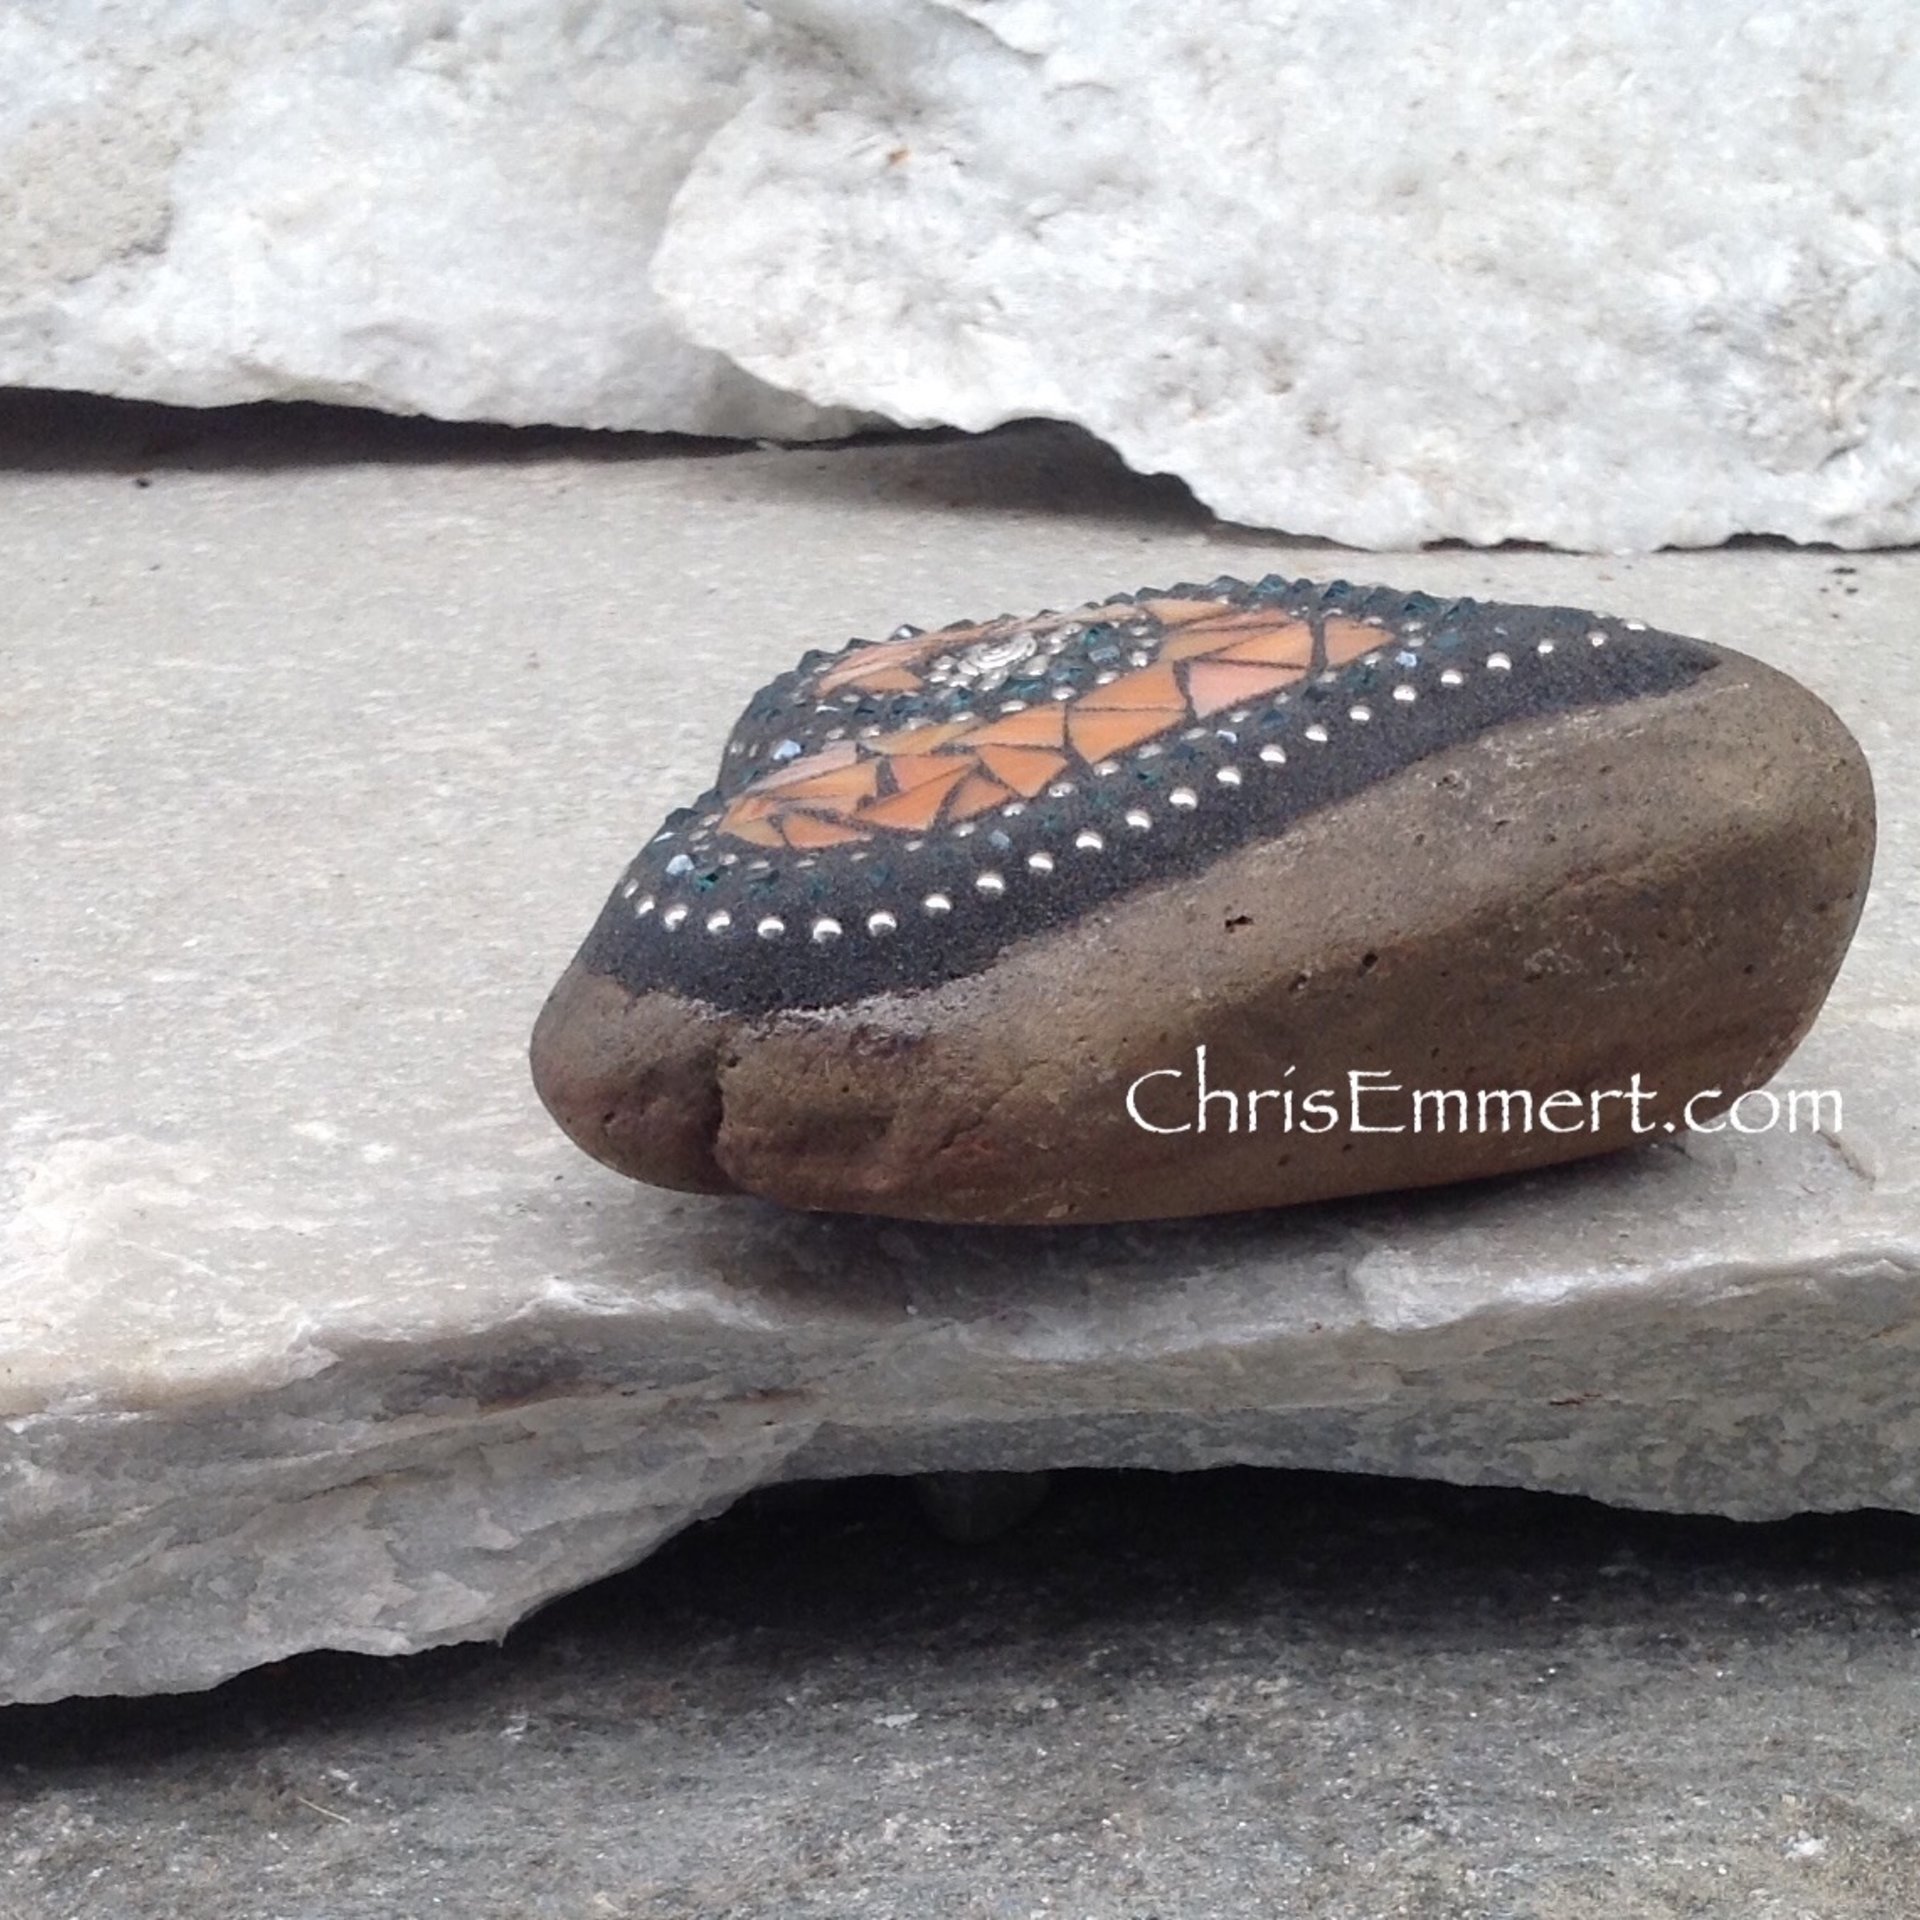 Orange Mosaic Heart, Mosaic Rock, Mosaic Garden Stone, Home Decor, Gardening, Gardening Gift,